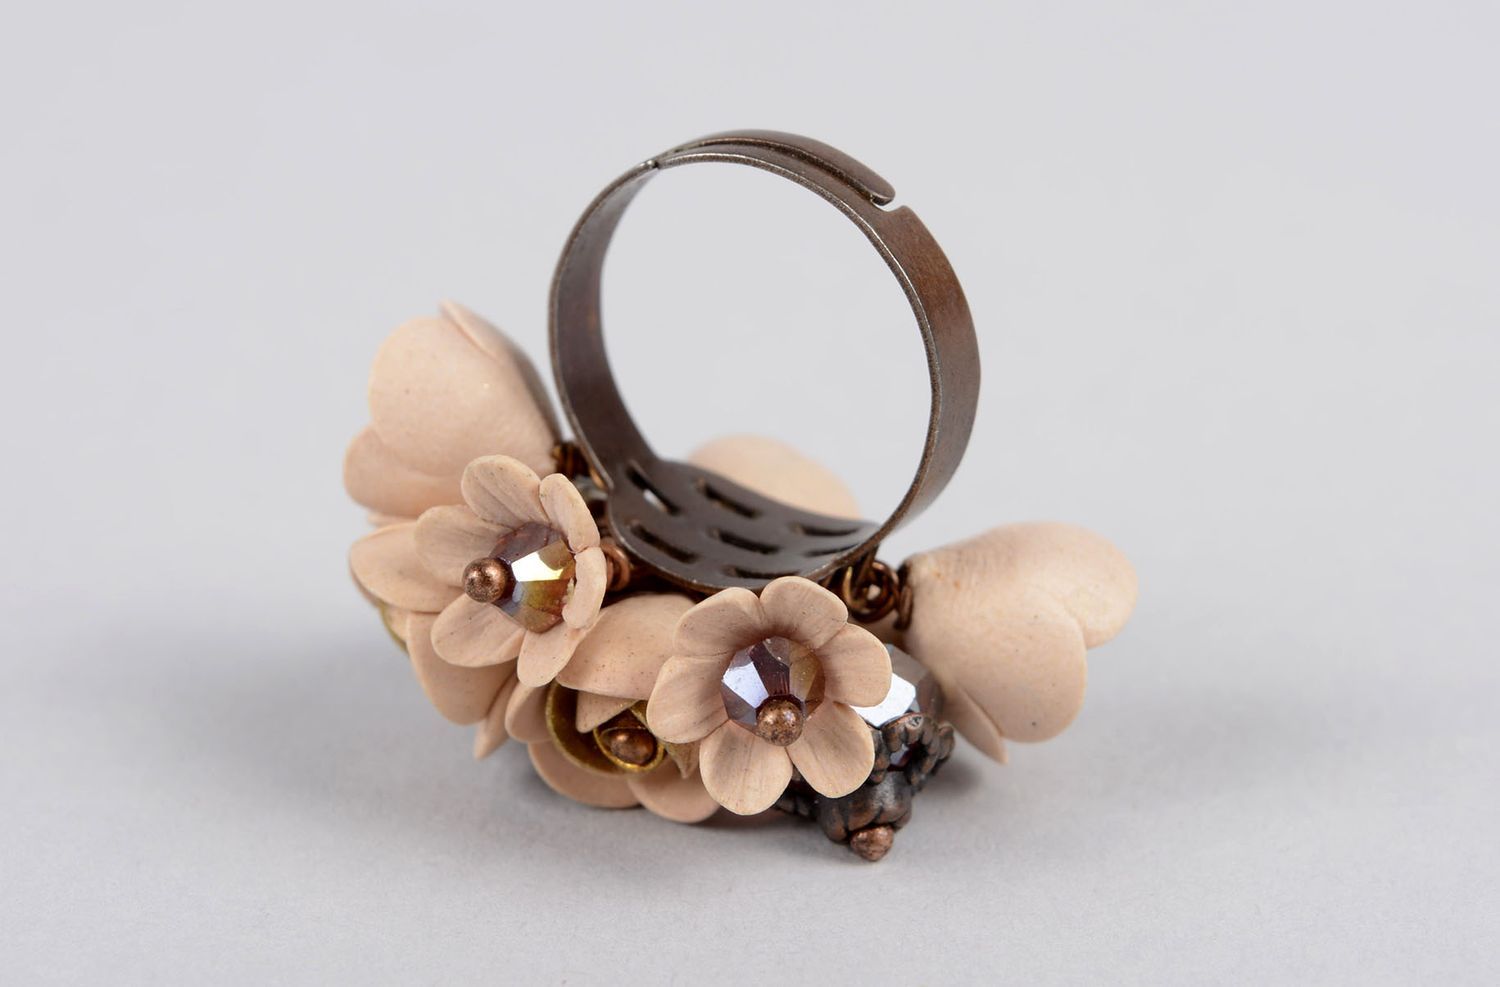 Set of 2 gold-plated flower antique ring bracelet - Adwitiya - 4179183